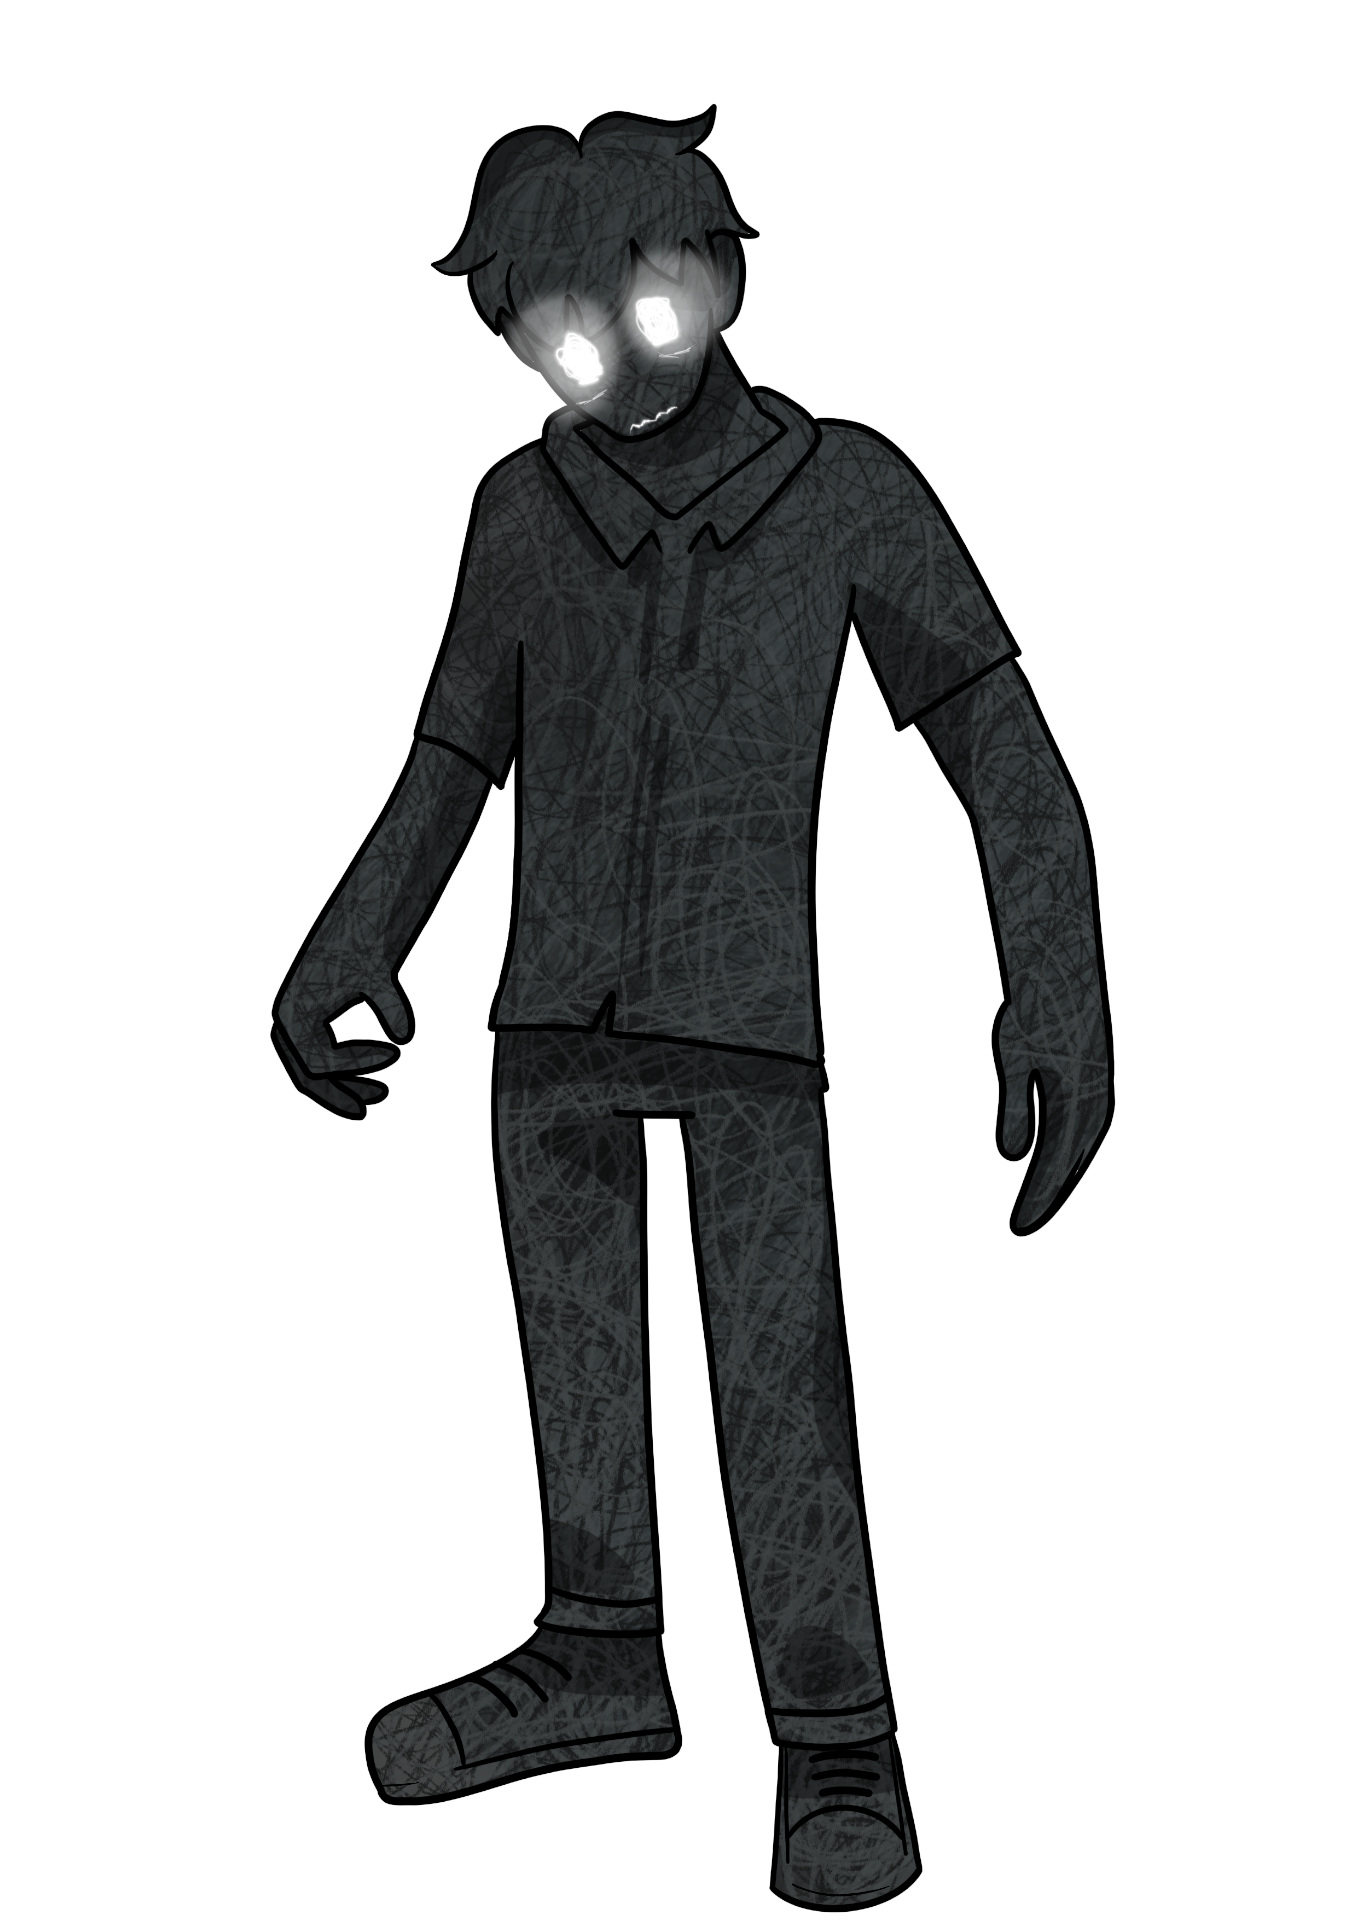 Illustration of shadowy man with shining eyes